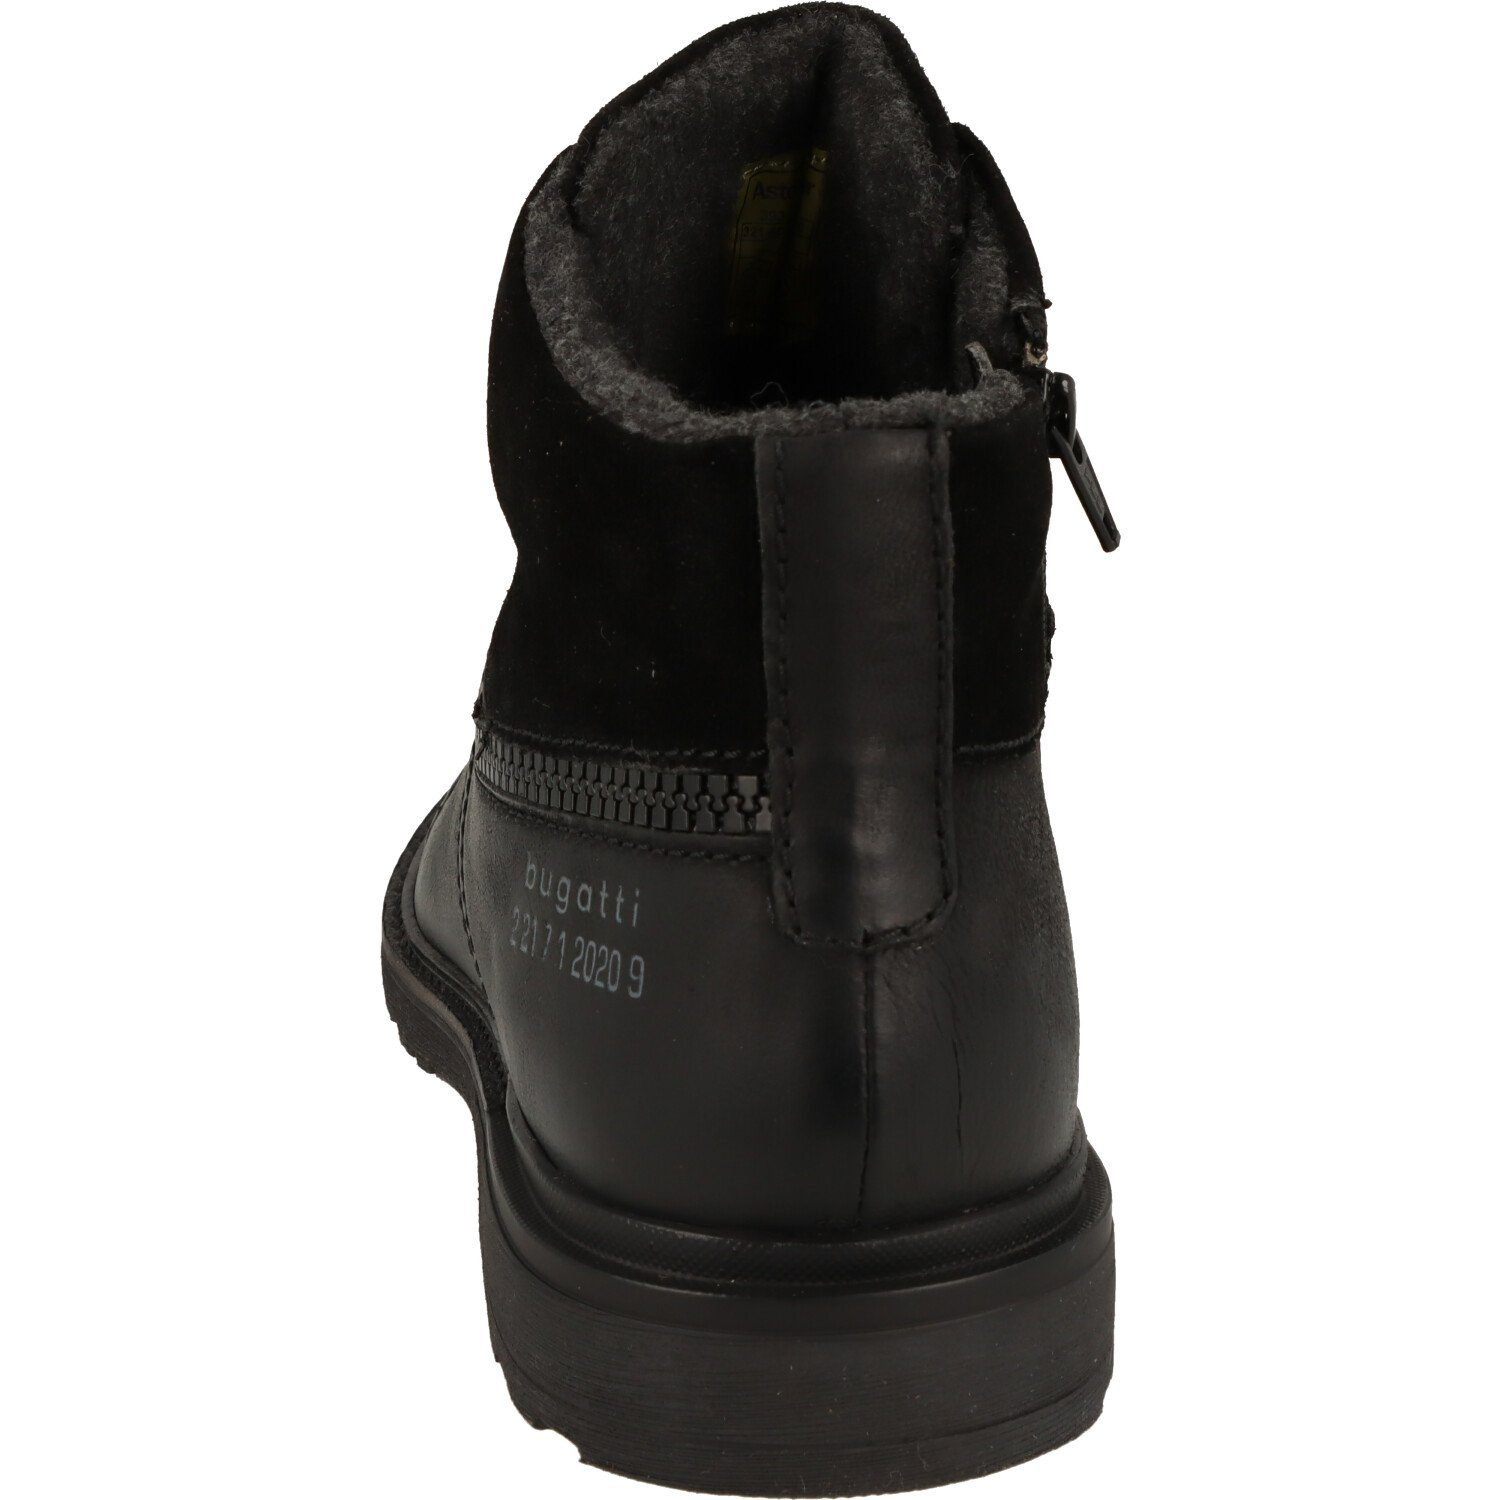 321-A0U3G-3200 Winterstiefel Leder bugatti Black Vittore Boots Schuhe Stiefel Herren